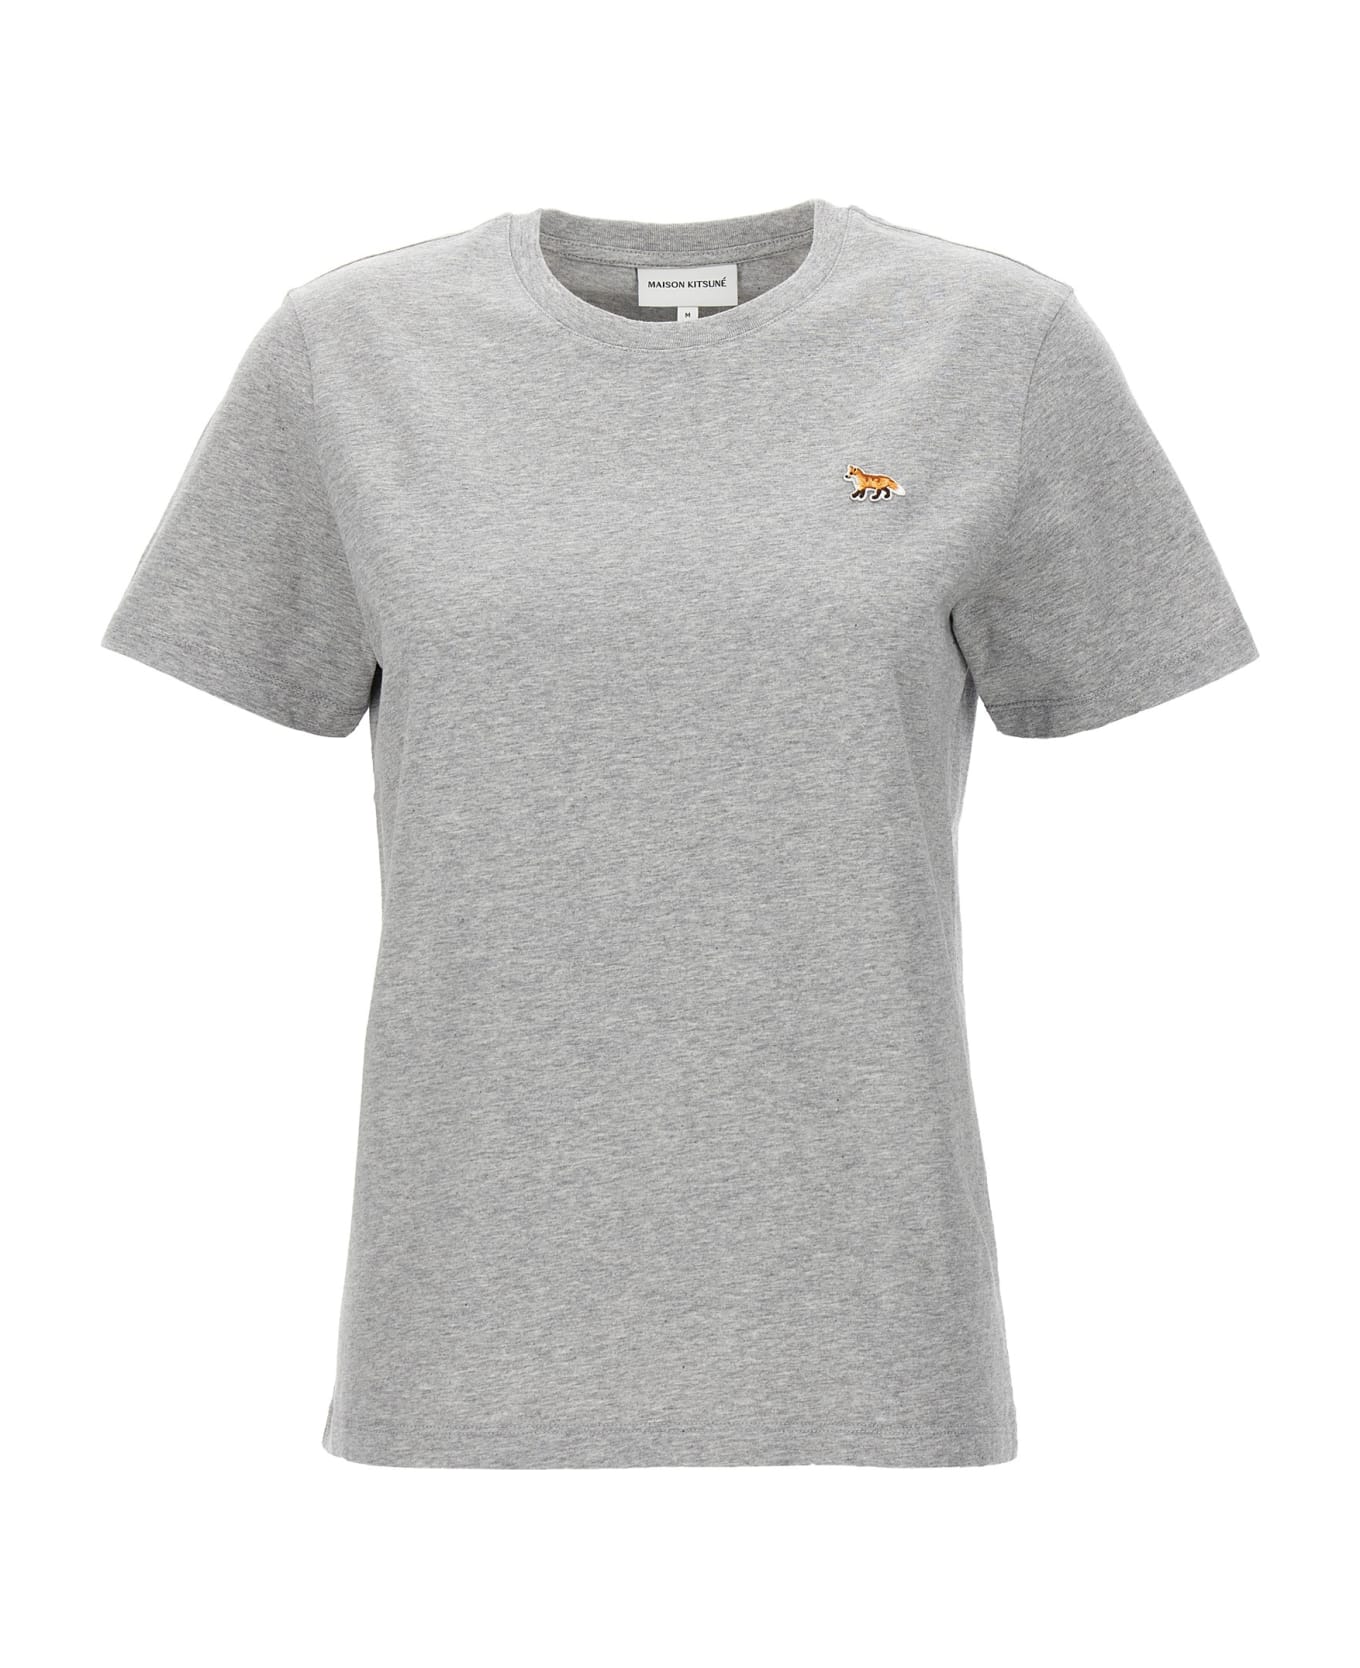 Maison Kitsuné 'baby Fox' T-shirt - Grey